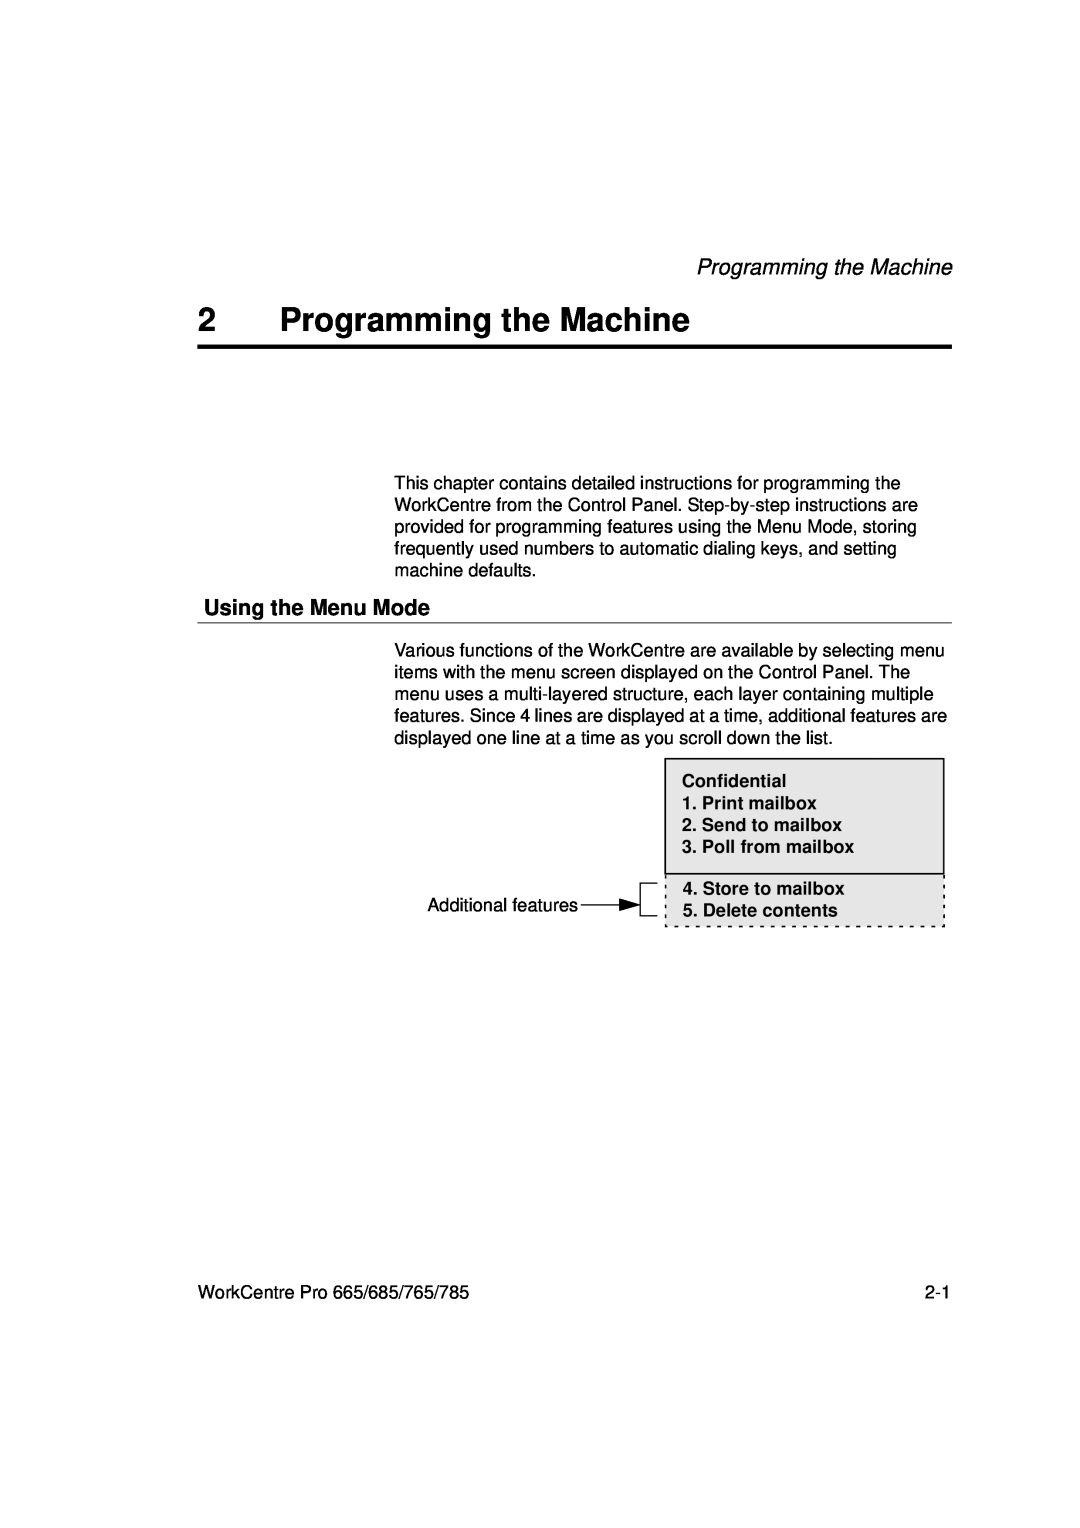 Xerox 665 Programming the Machine, Using the Menu Mode, Confidential 1. Print mailbox 2. Send to mailbox, Store to mailbox 